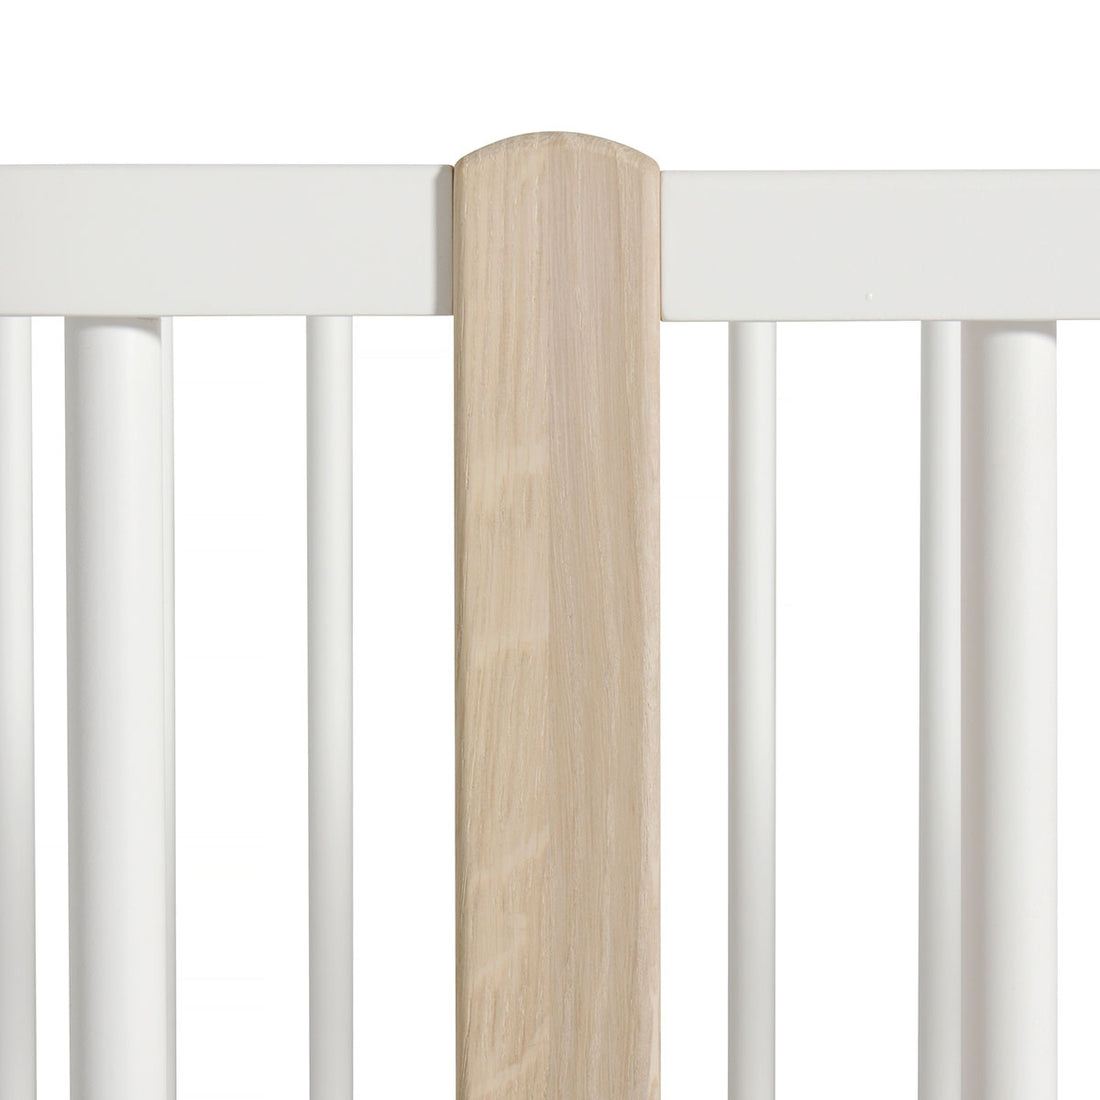 oliver-furniture-wood-cot-white-oak- (10)